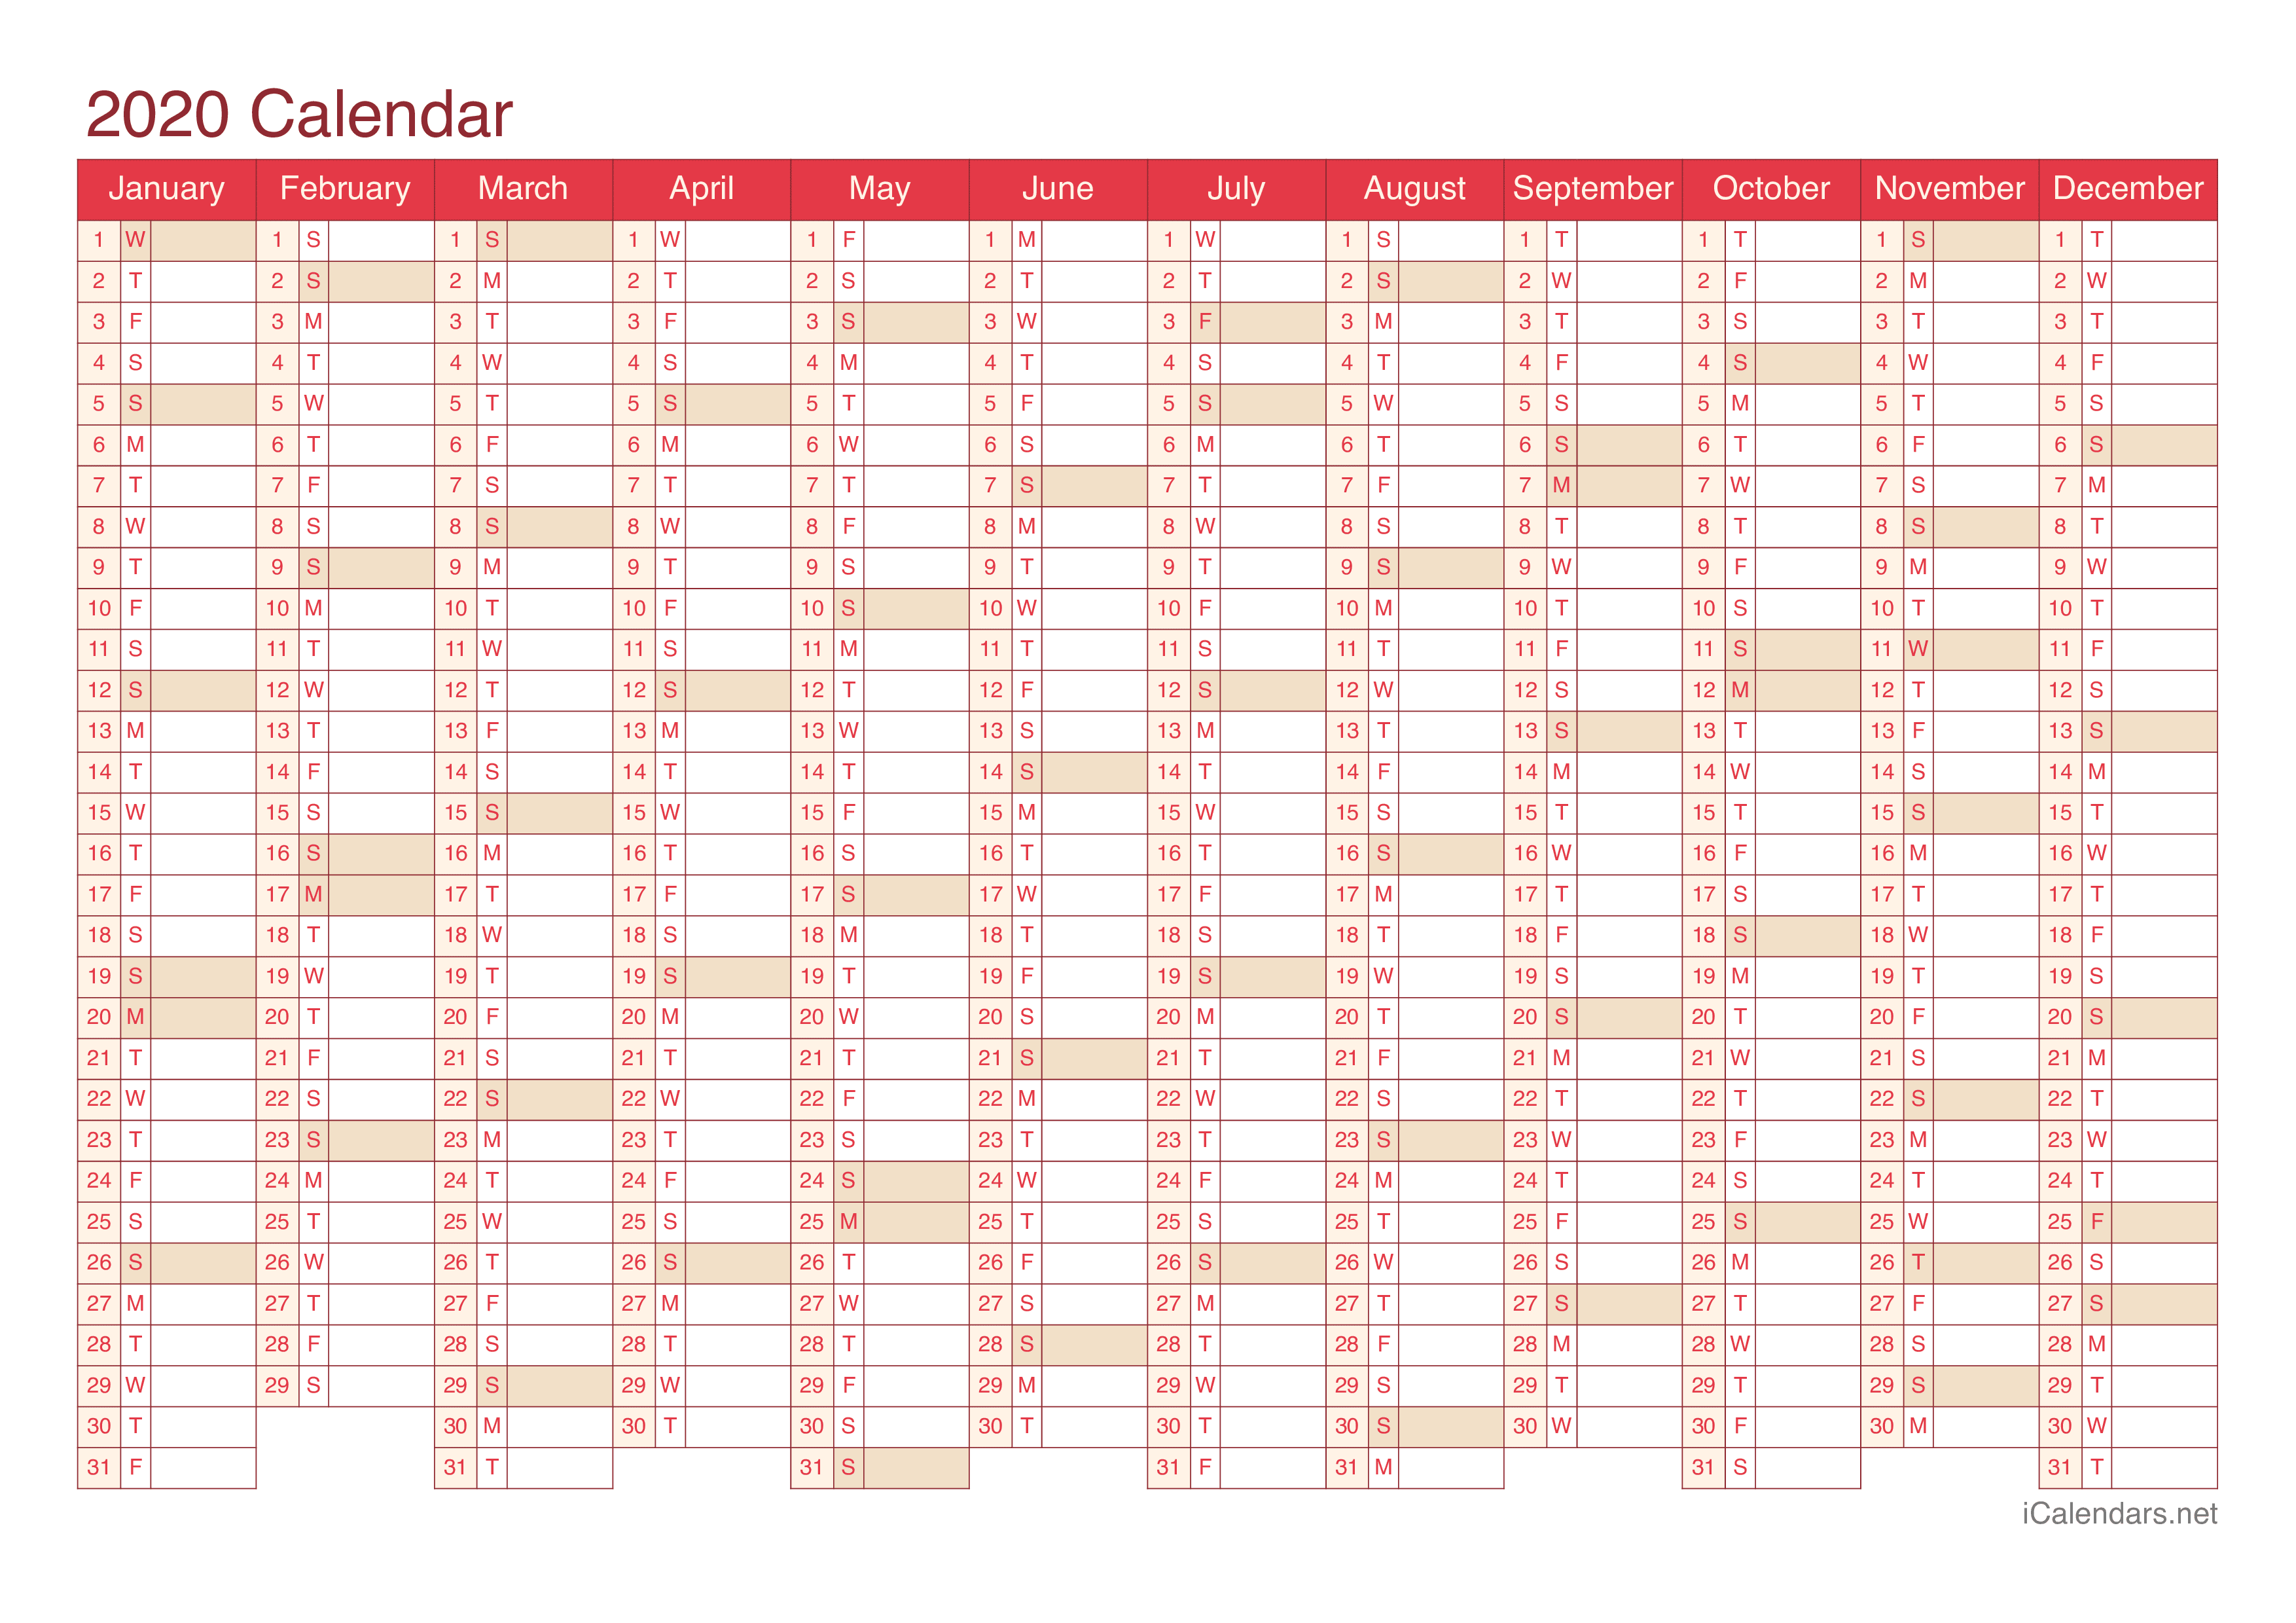 2020 Calendar - Cherry